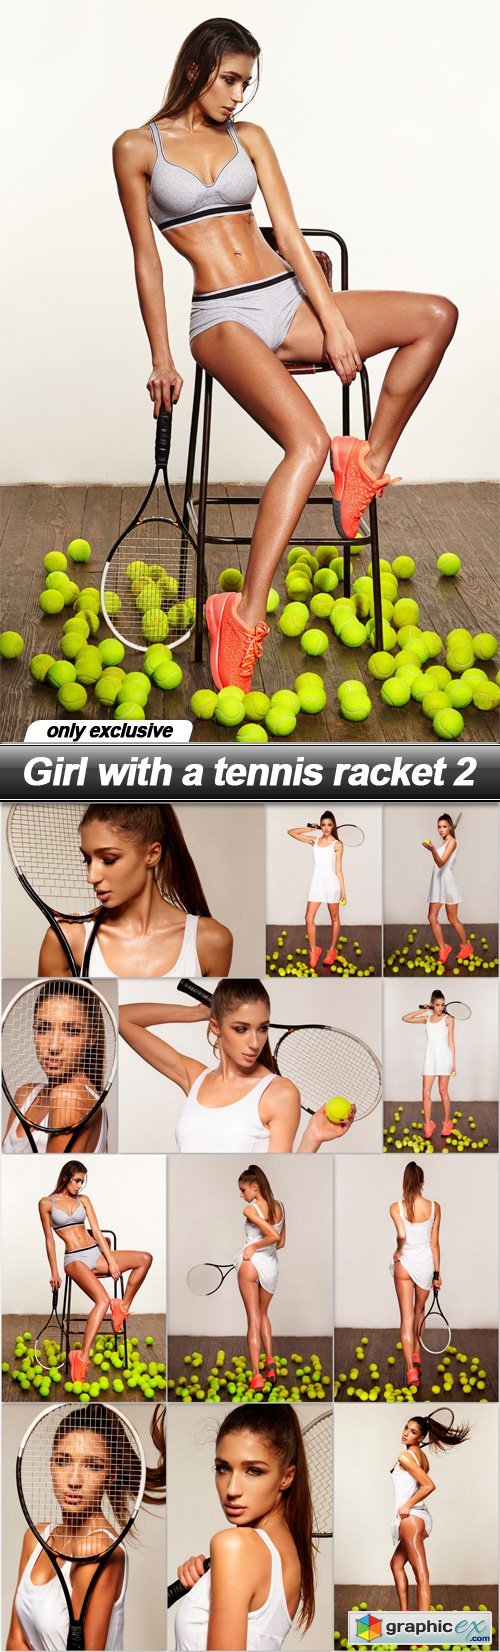 Girl with a tennis racket 2 - 12 UHQ JPEG